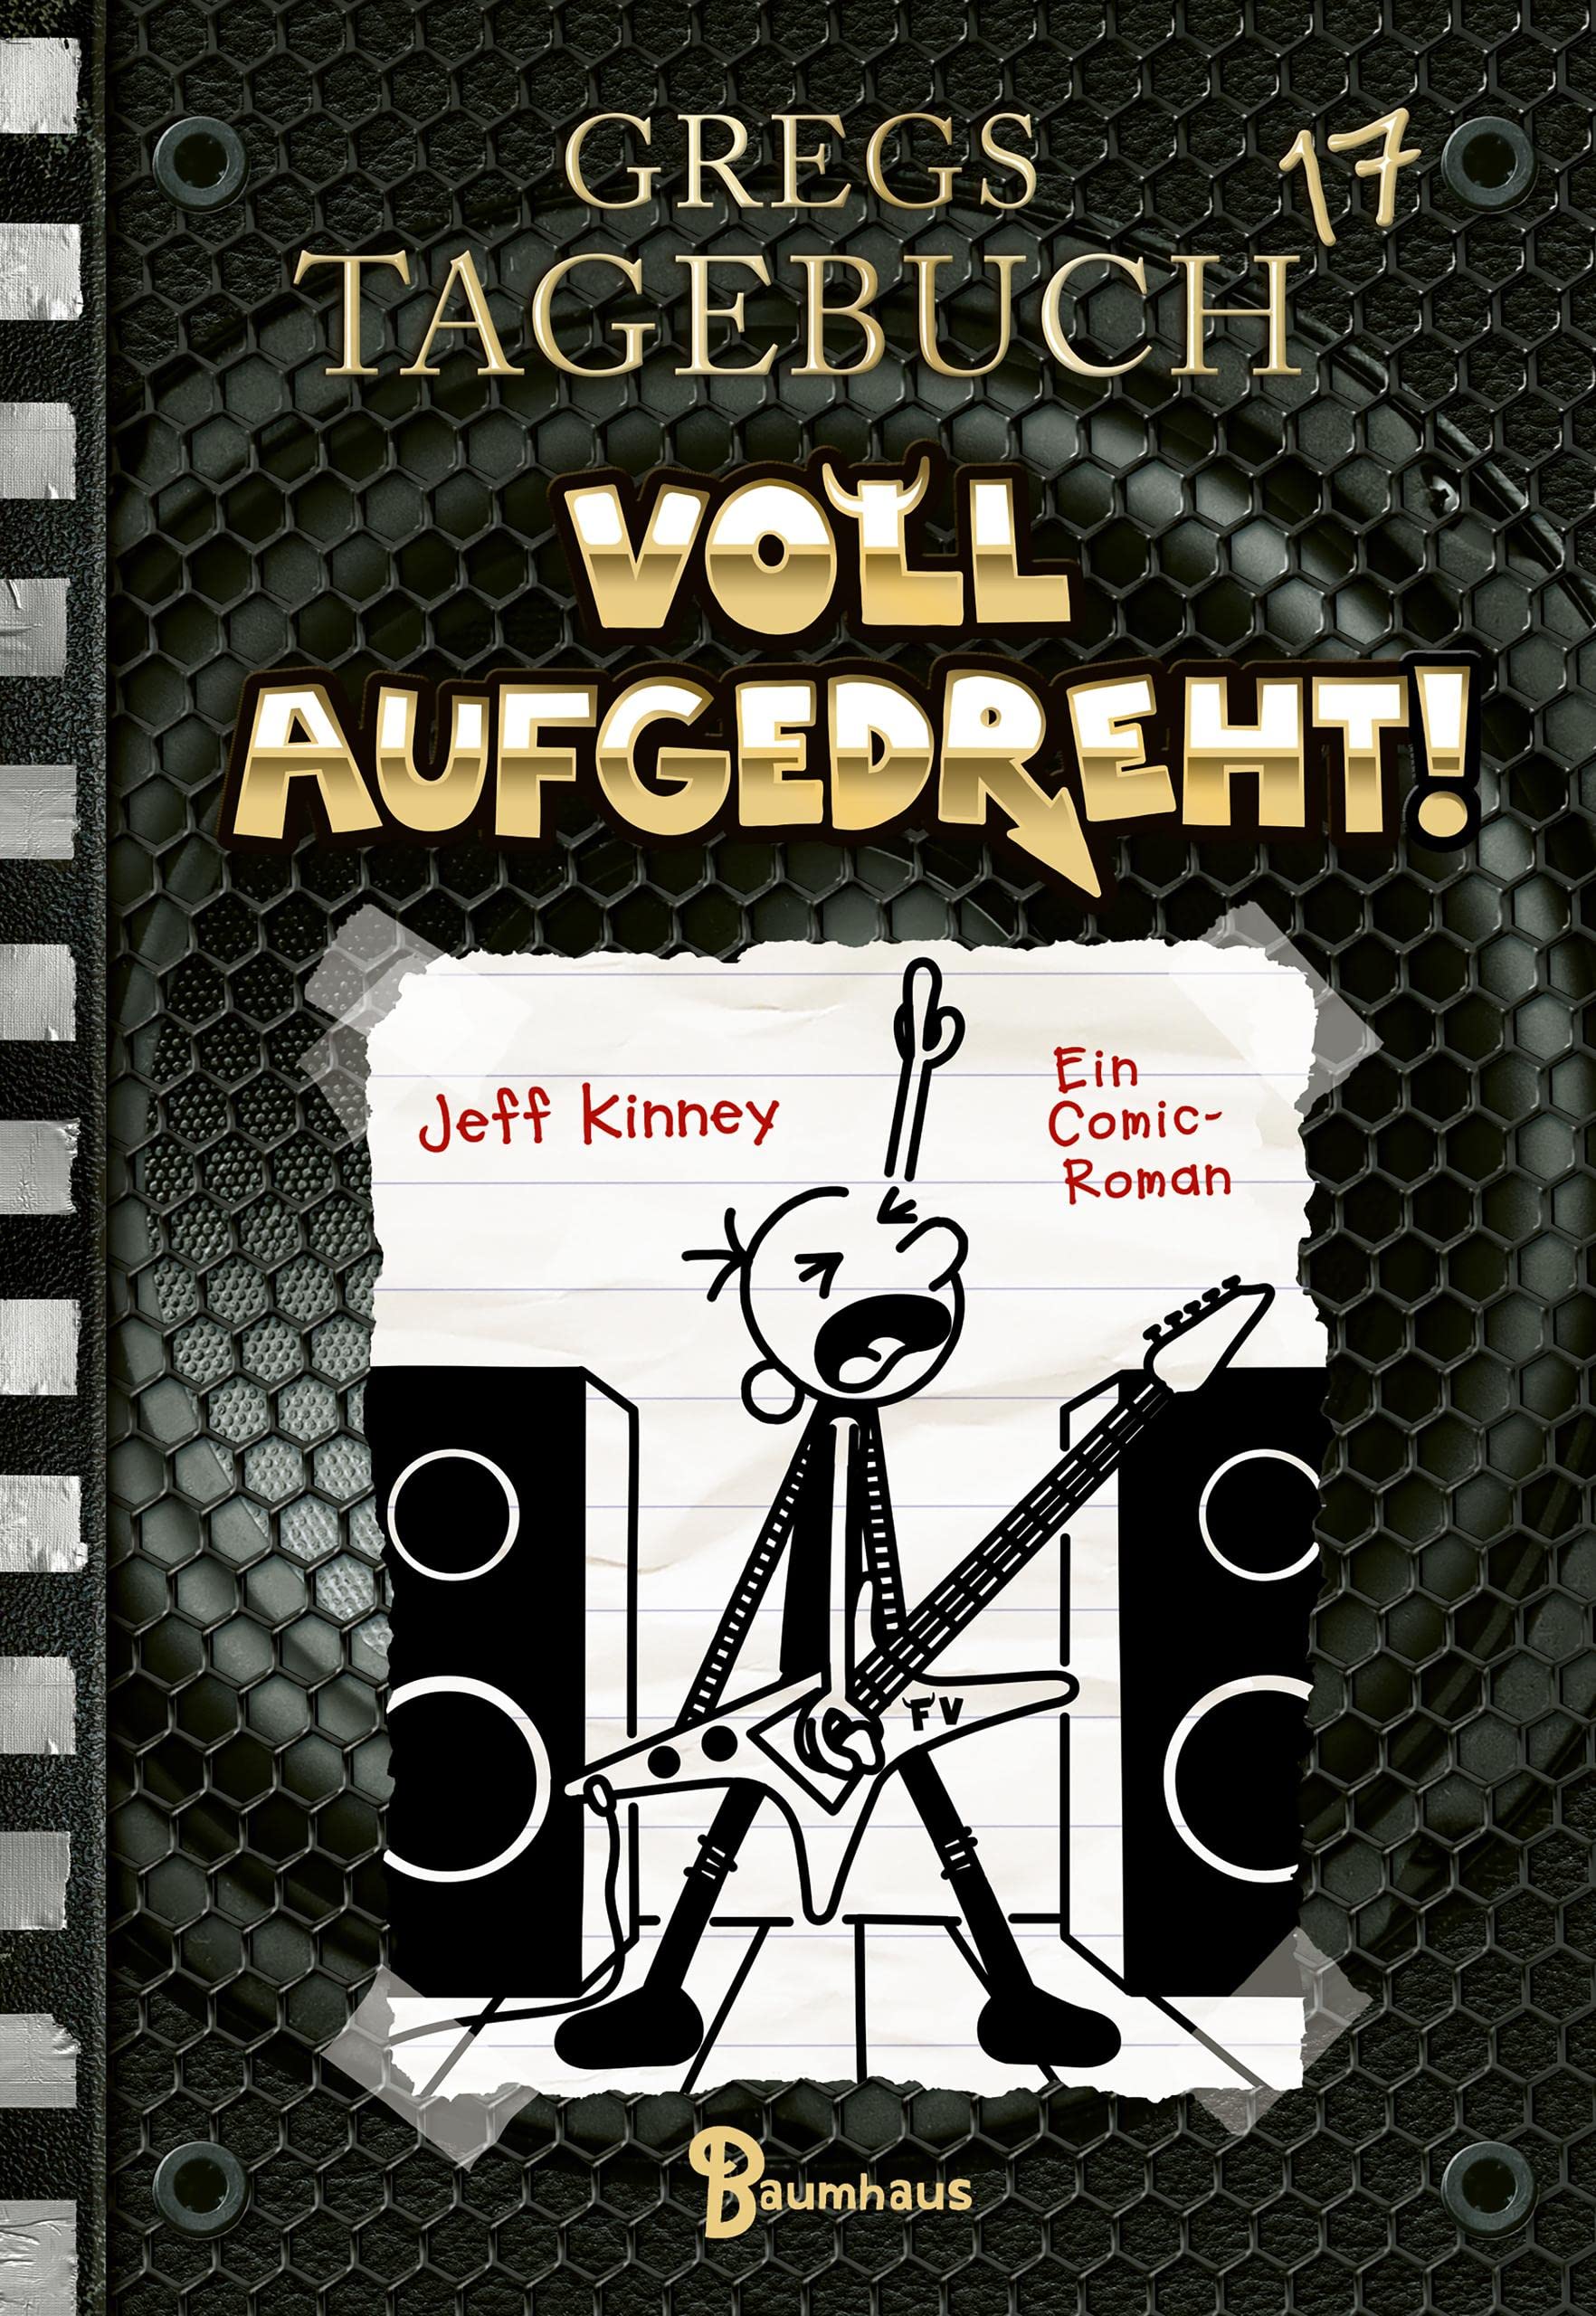 Gregs Tagebuch 17: Voll aufgedreht! (German Edition)